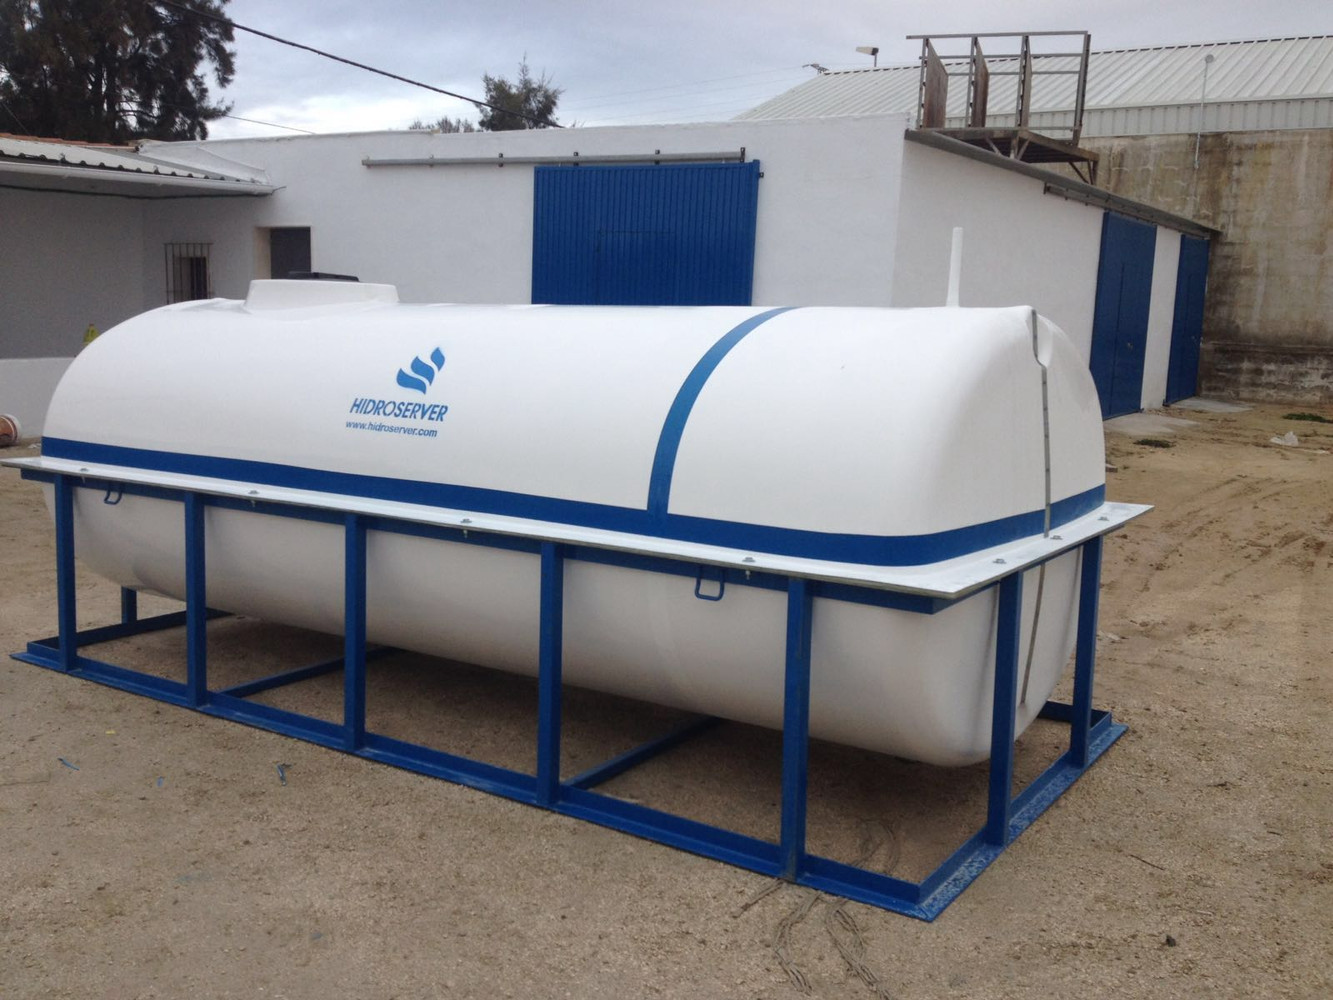 Deposito de agua - Cuba para transporte y riego de agua potable